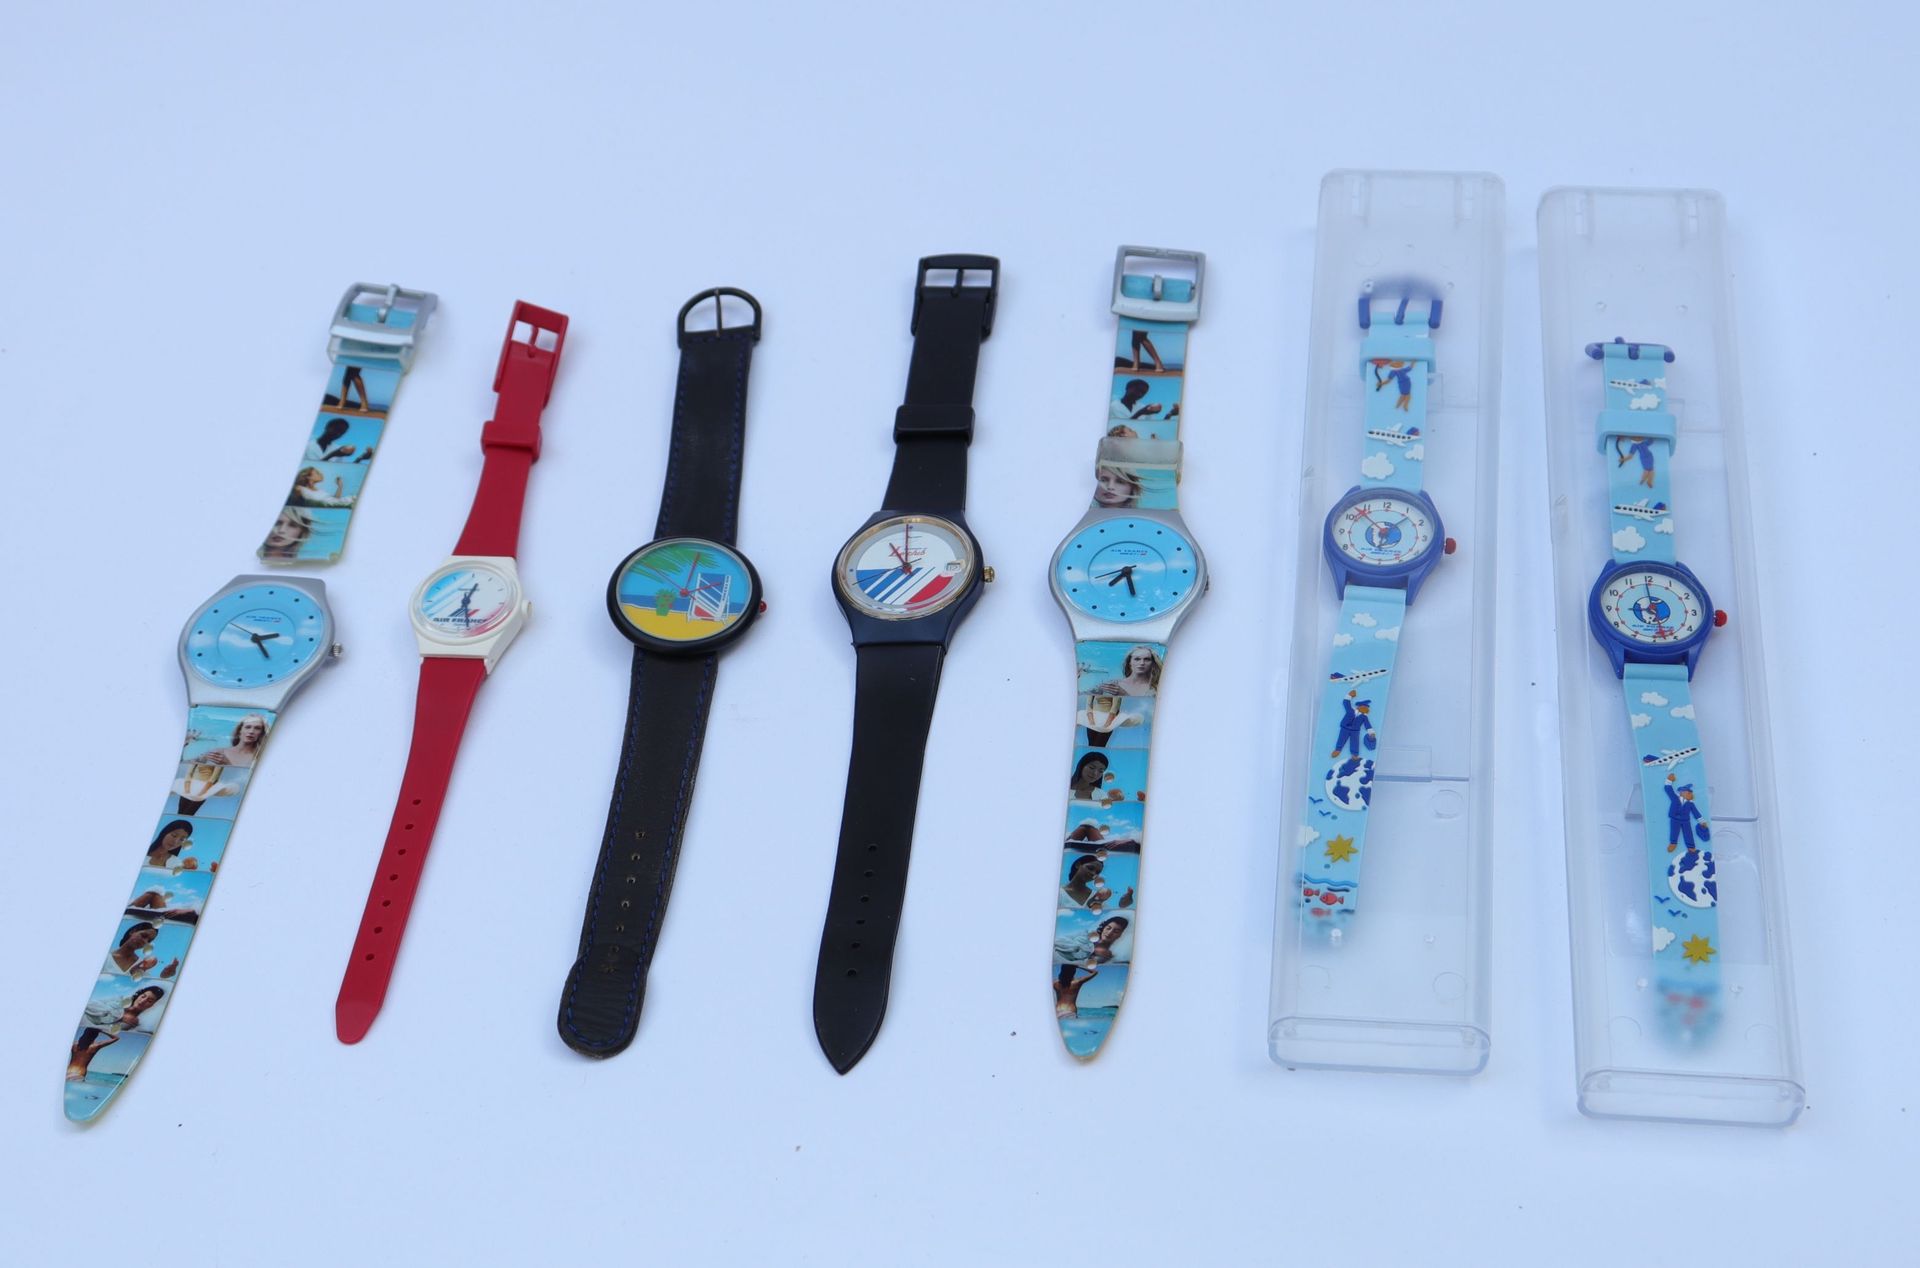 Null 法国航空公司的手表。

7个塑料腕表，包括2个儿童型号。

表盘上有法航的签名。

有一个手表型号Kid的表带断了。



2021年11月9日（周二&hellip;